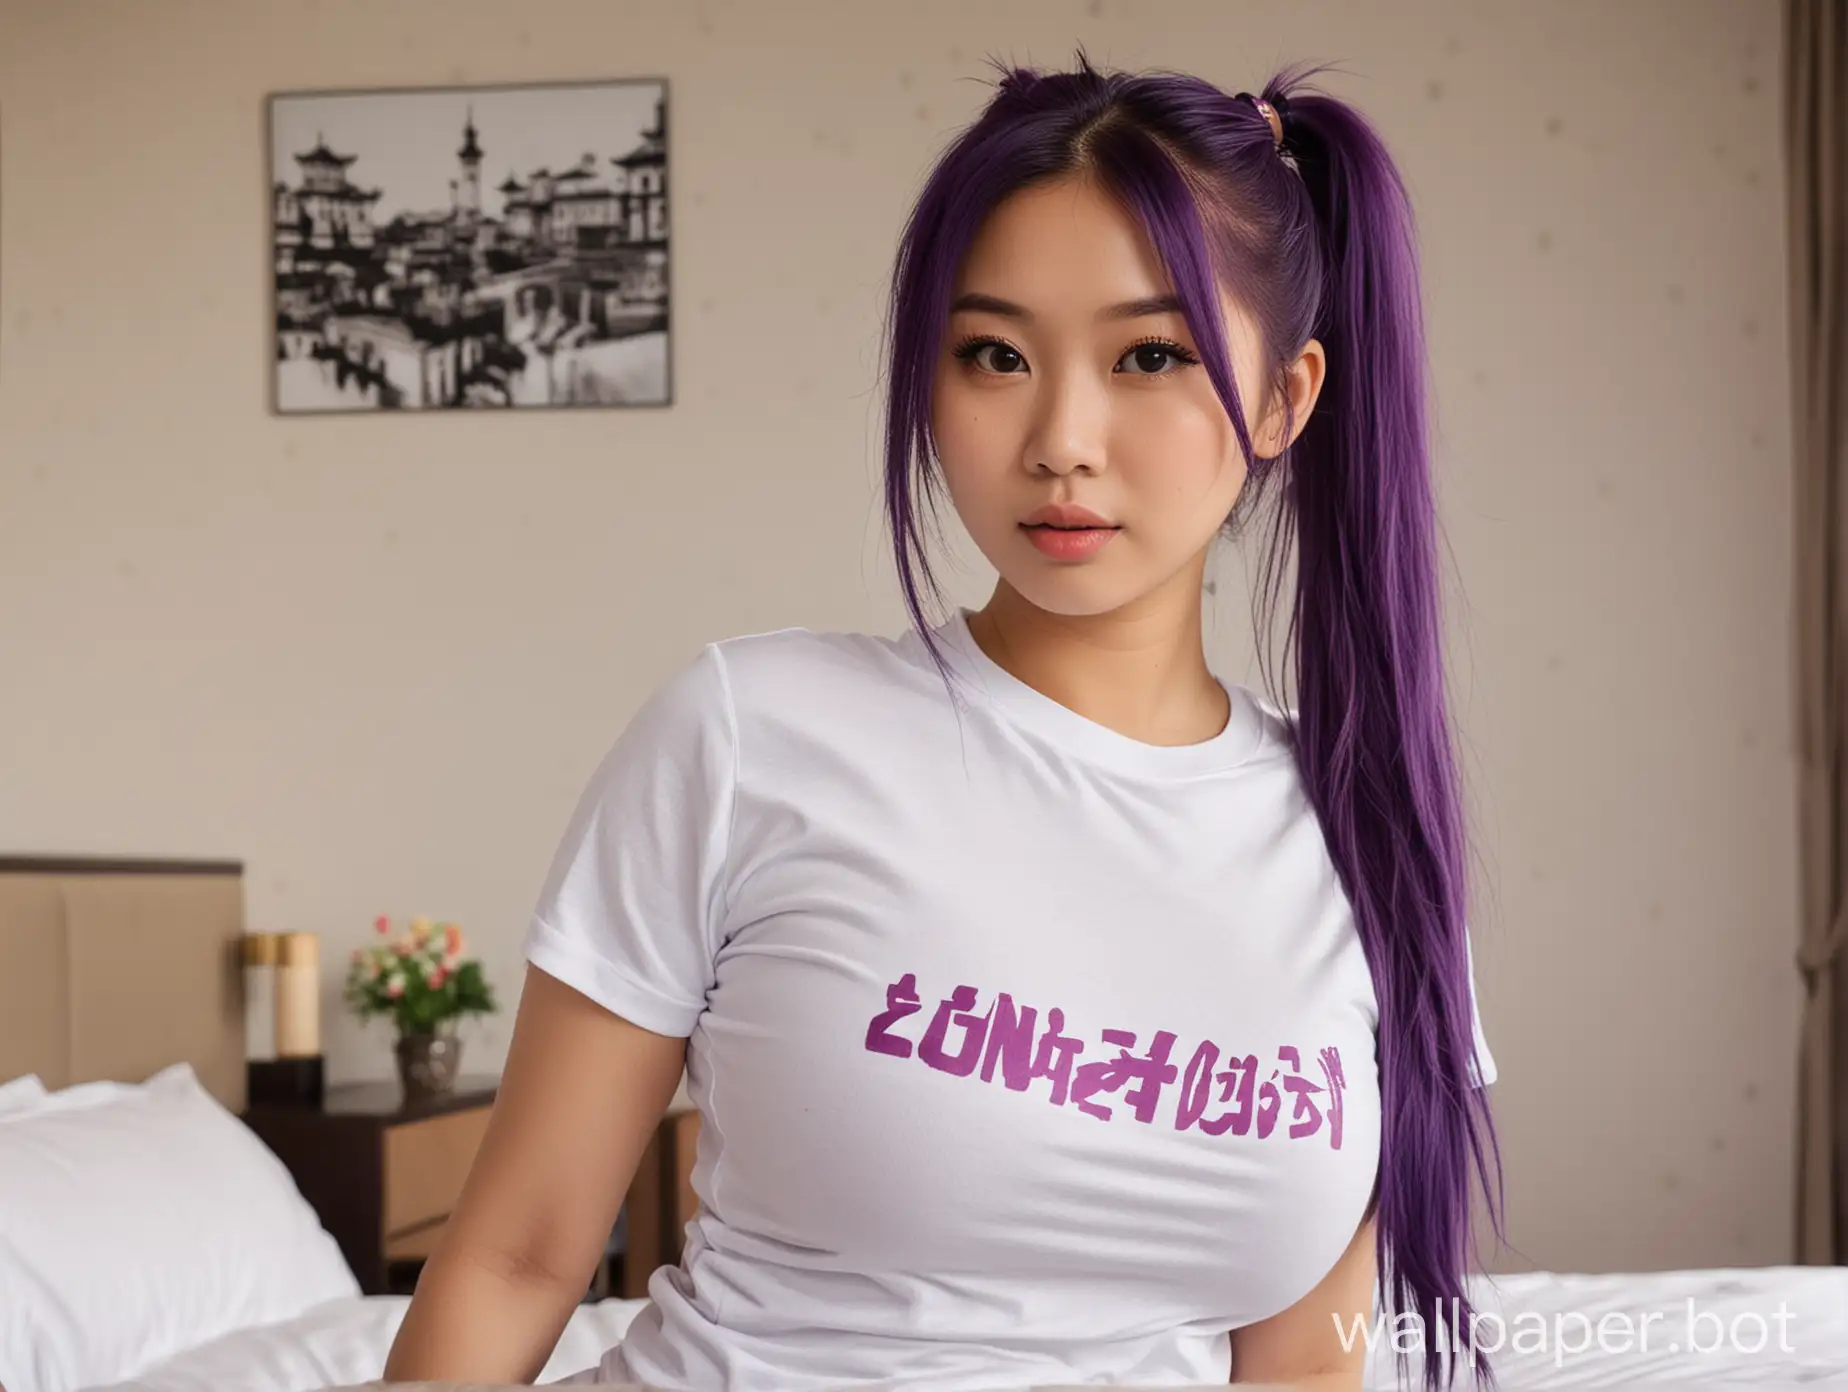 asian university student, big boobs, full lips, tight t-shirt, luxurious hotel room, purple hair, pony tail